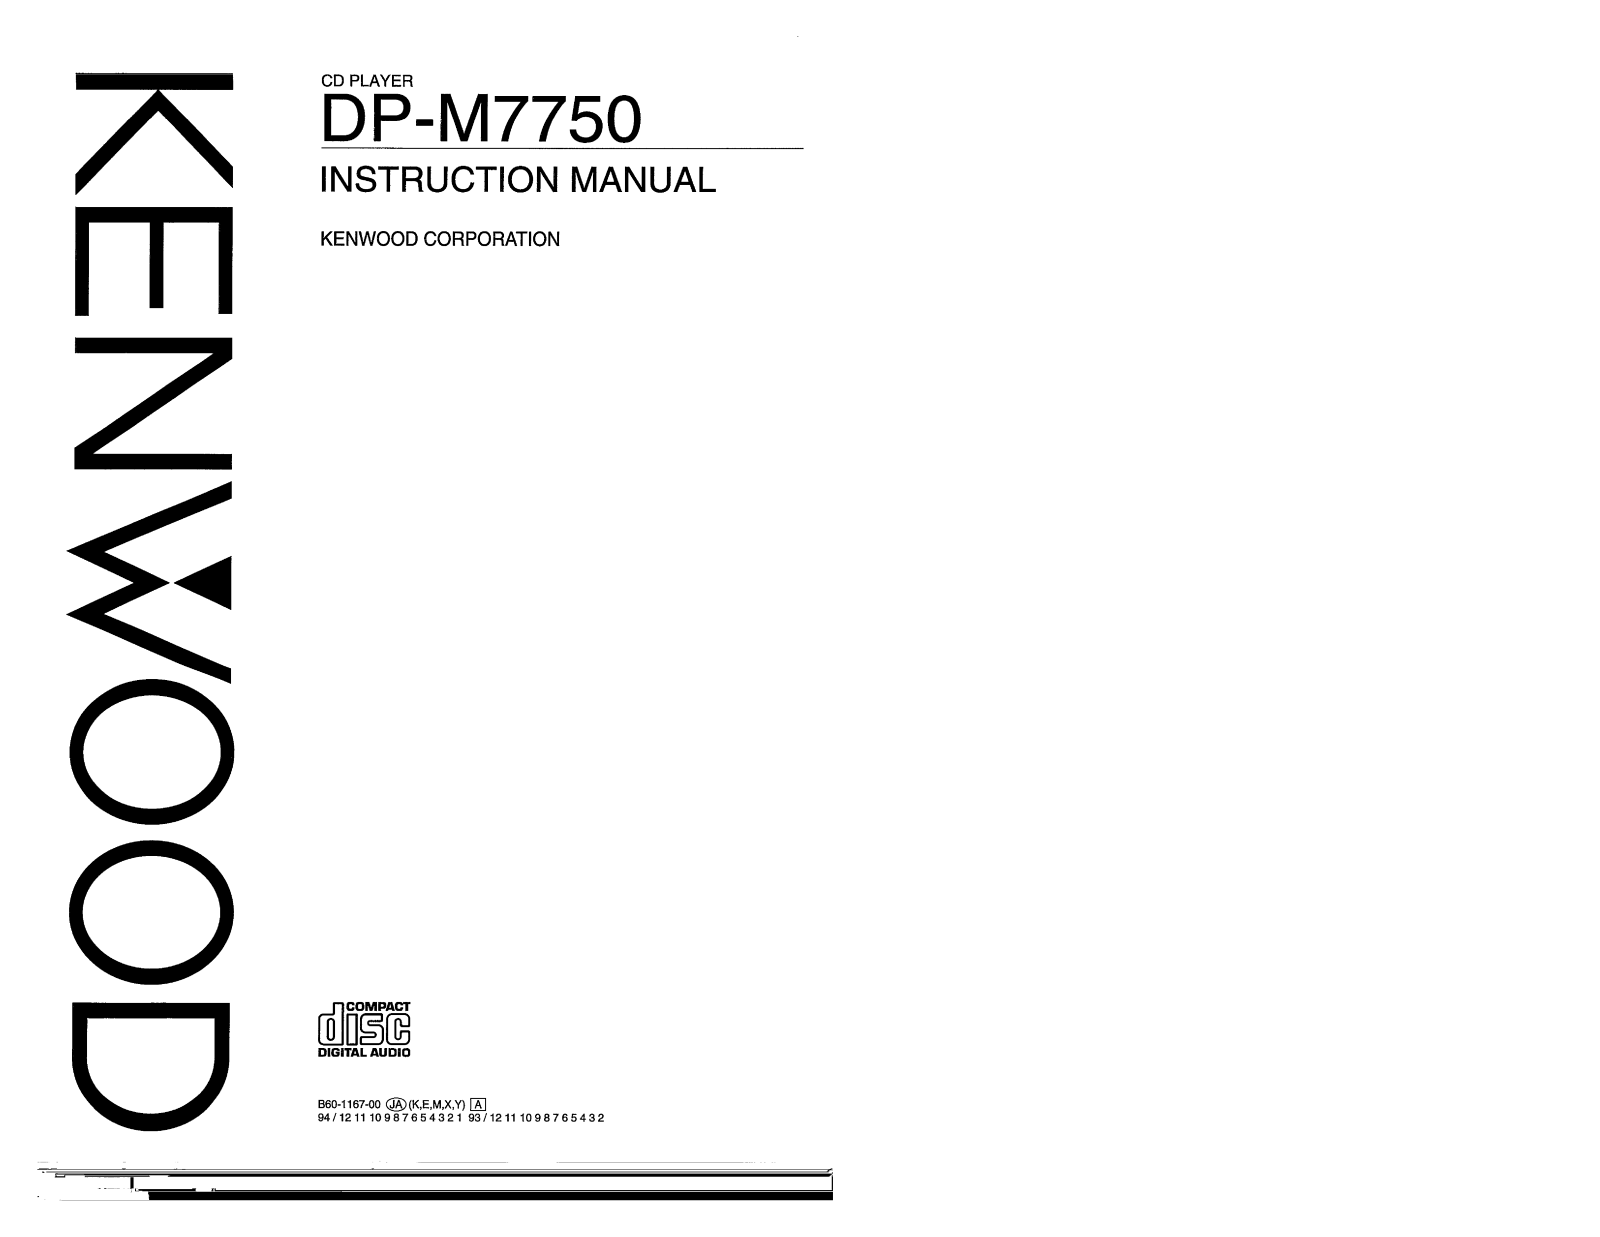 Kenwood DP-M7750 Owner's Manual